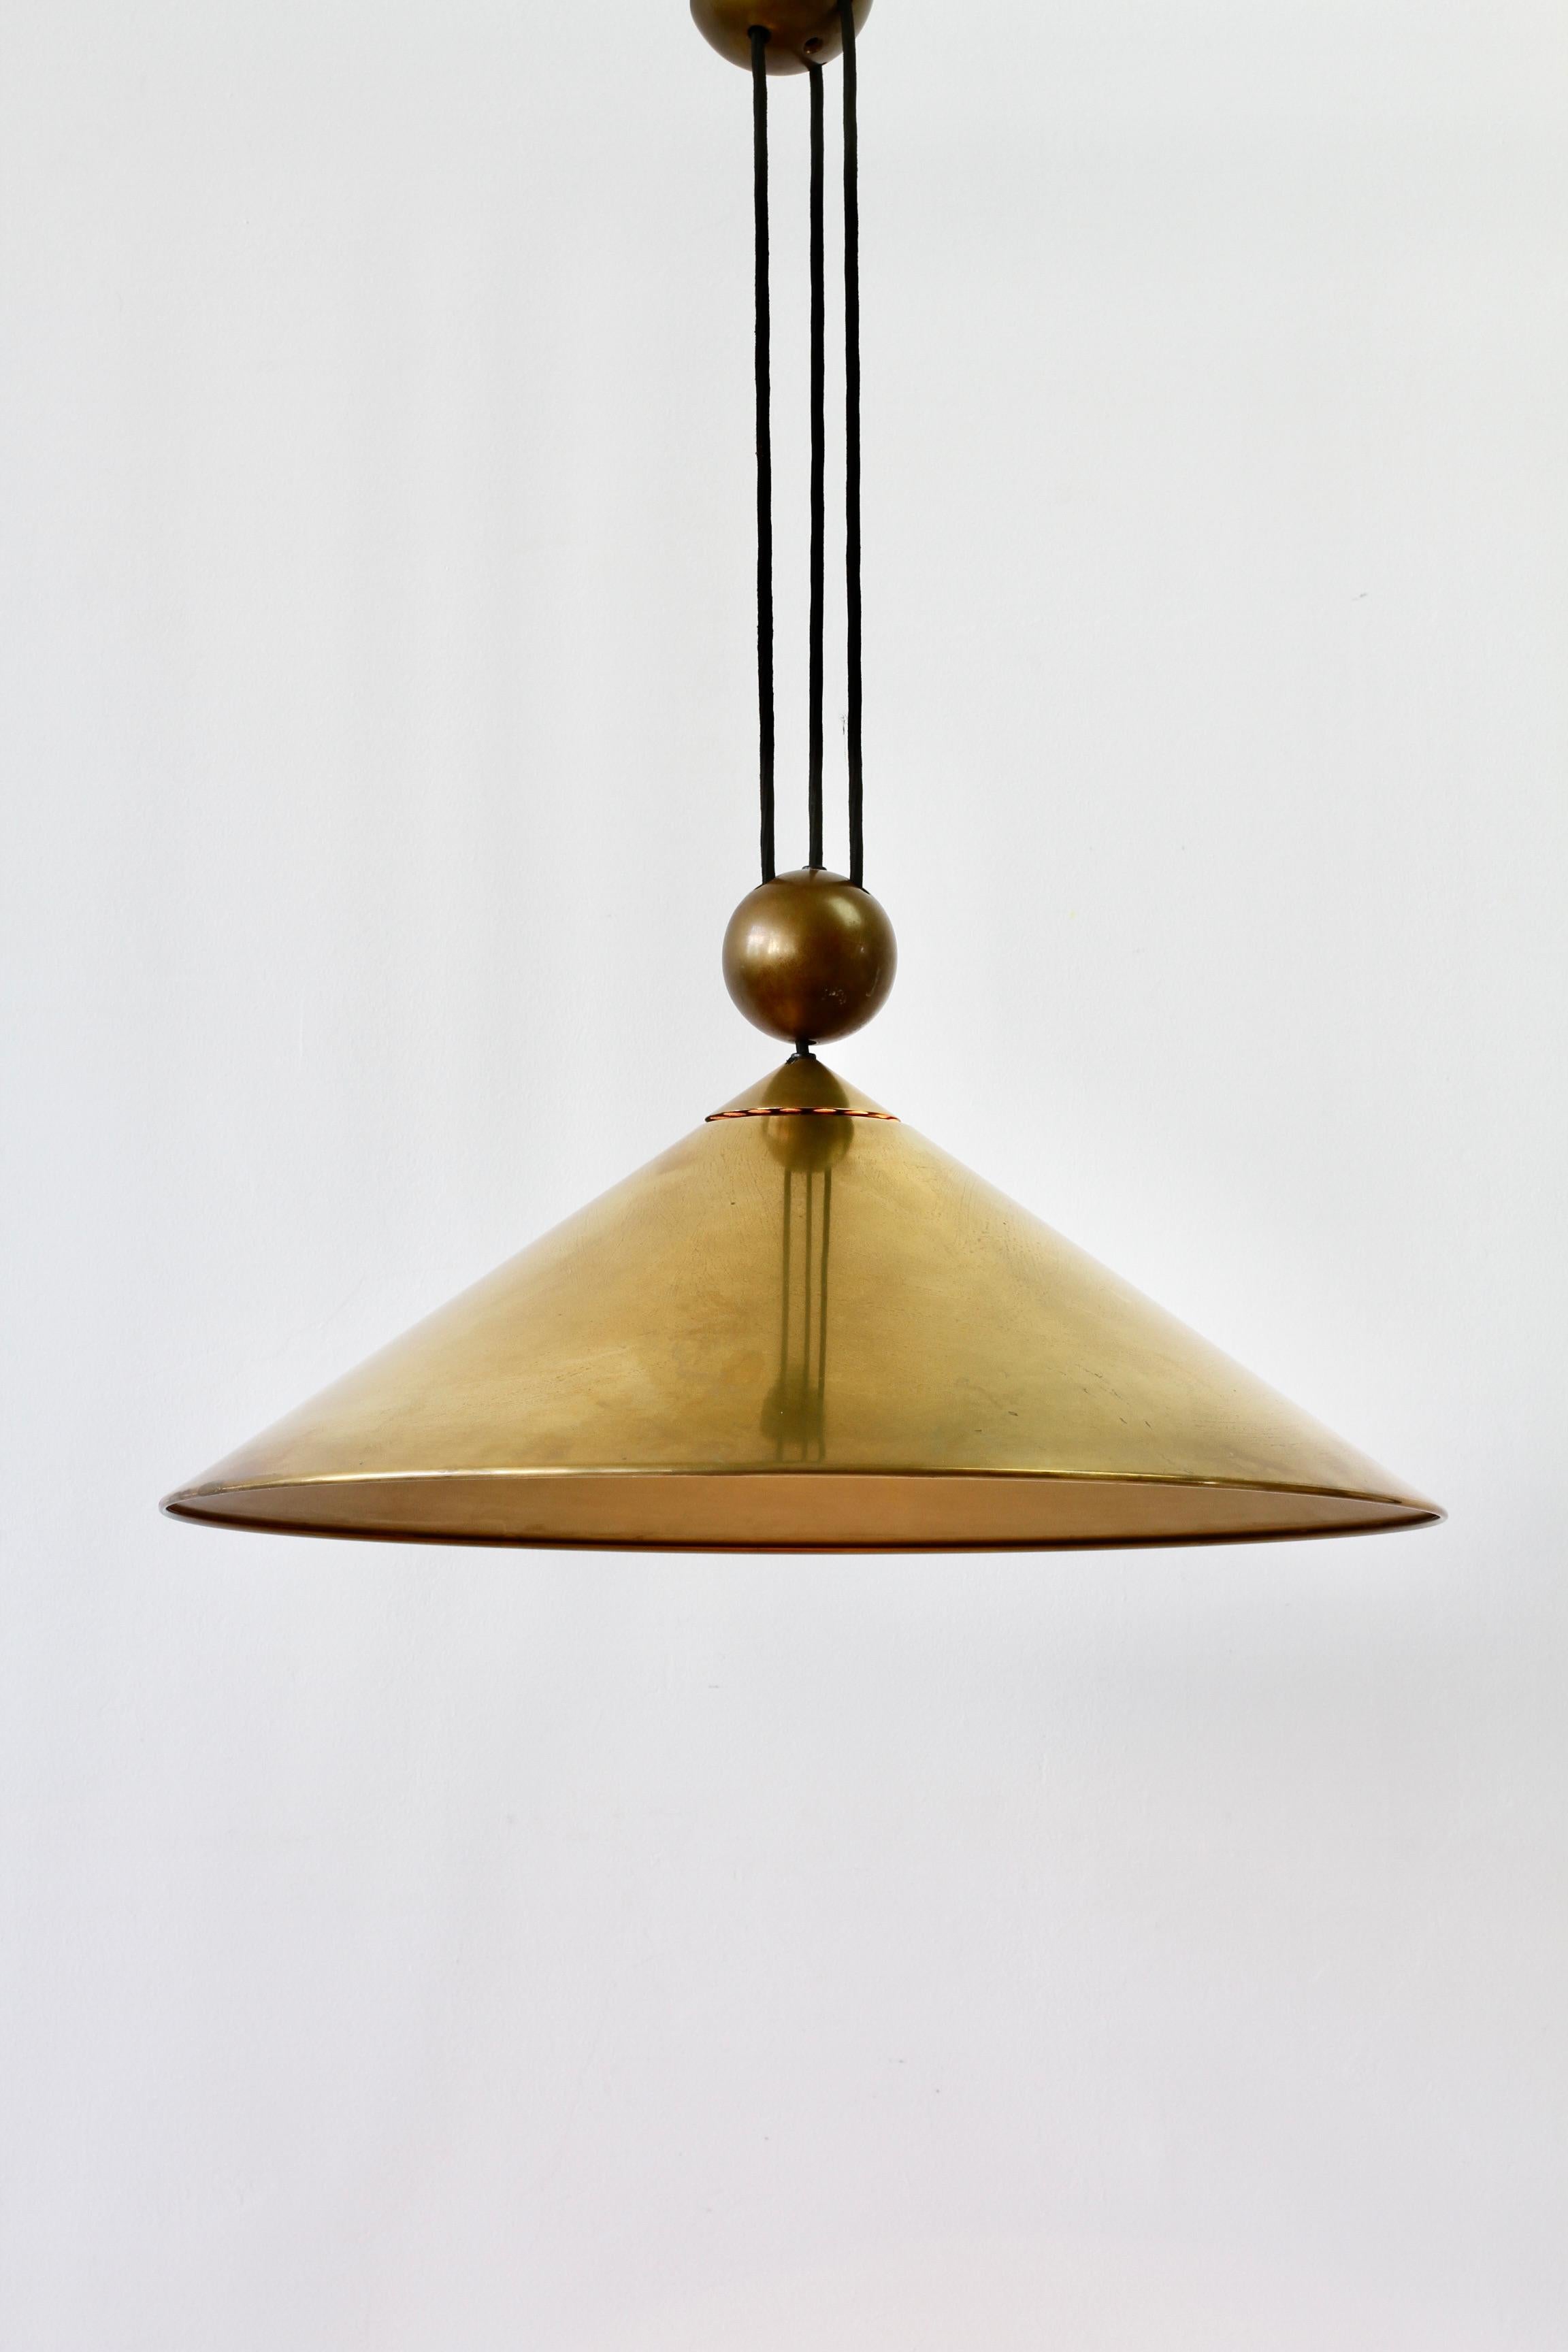 German Florian Schulz Vintage Modernist Brass Counterbalanced Adjustable Pendant Light